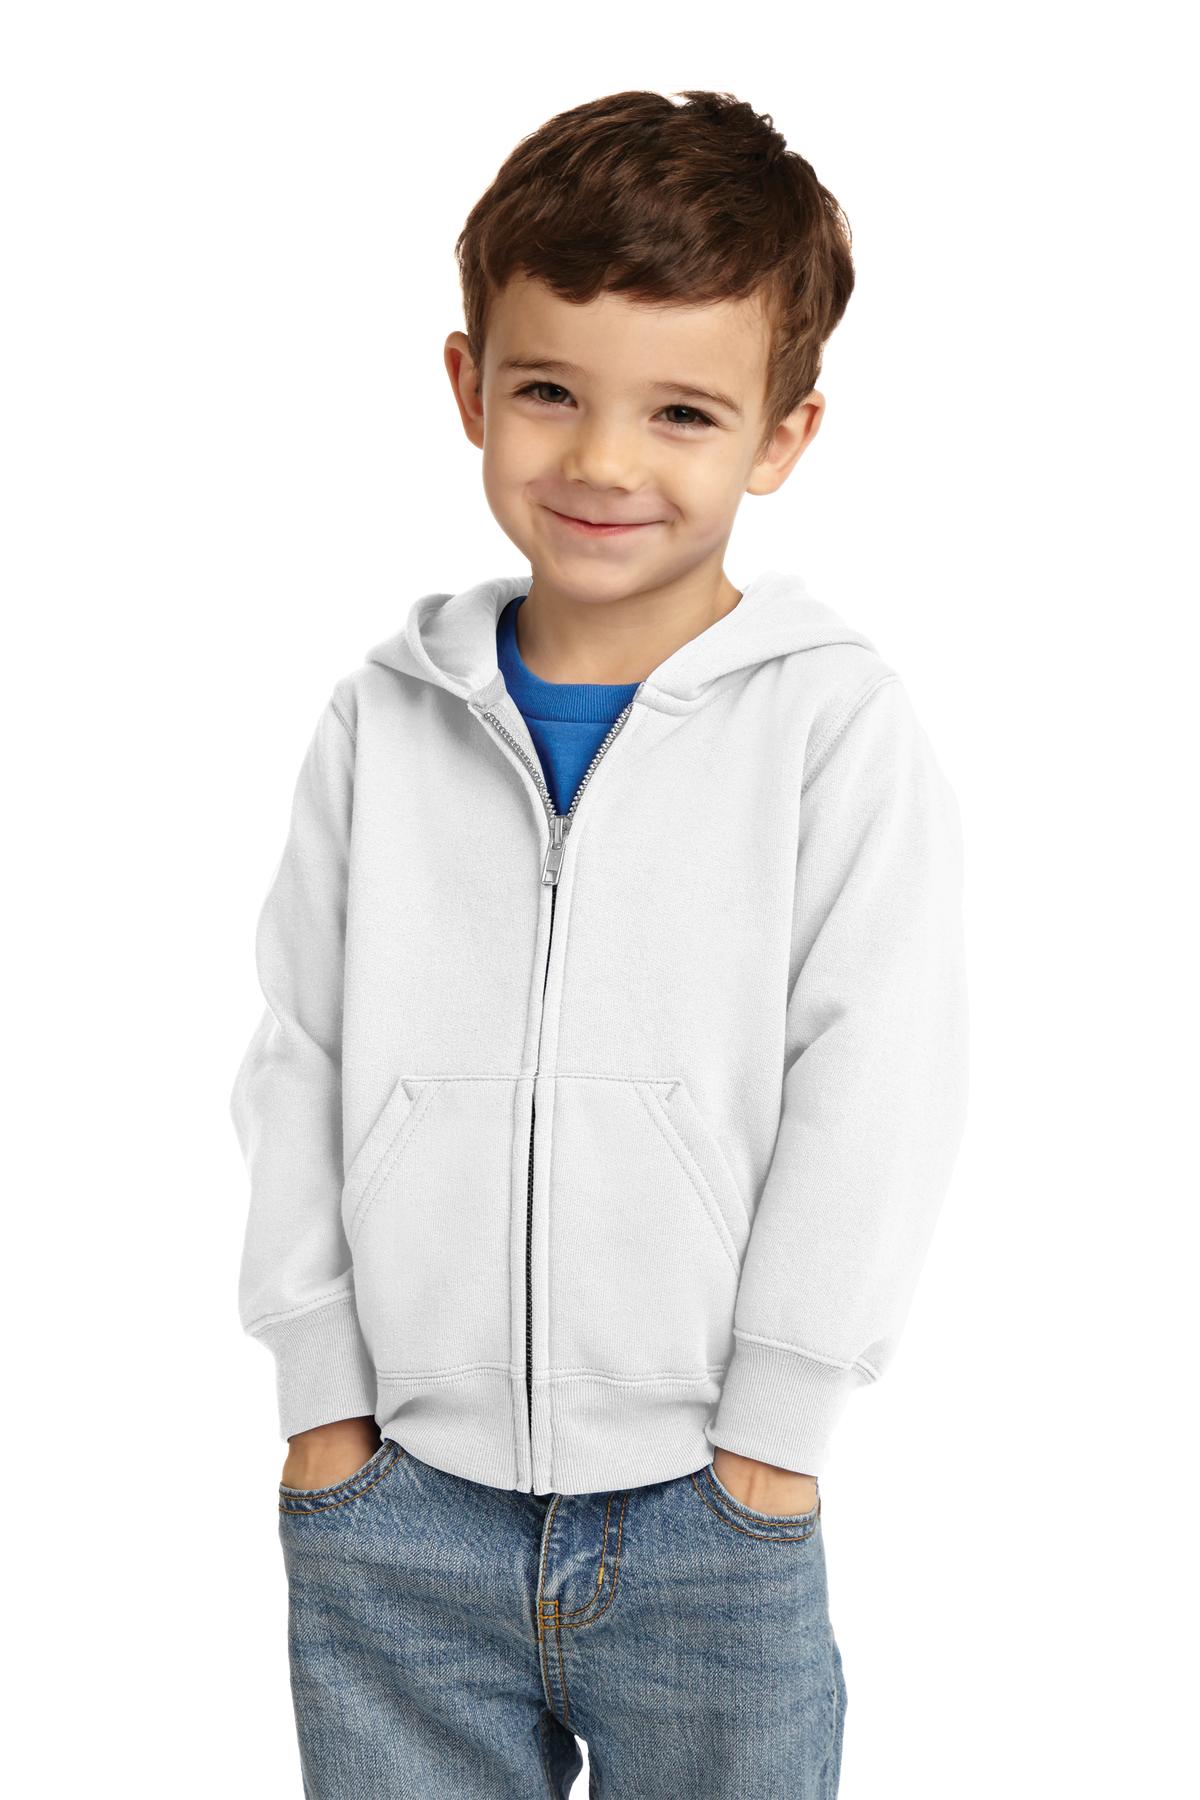 Port & Company Toddler Core Fleece Full-Zip Hooded Sweatshirt